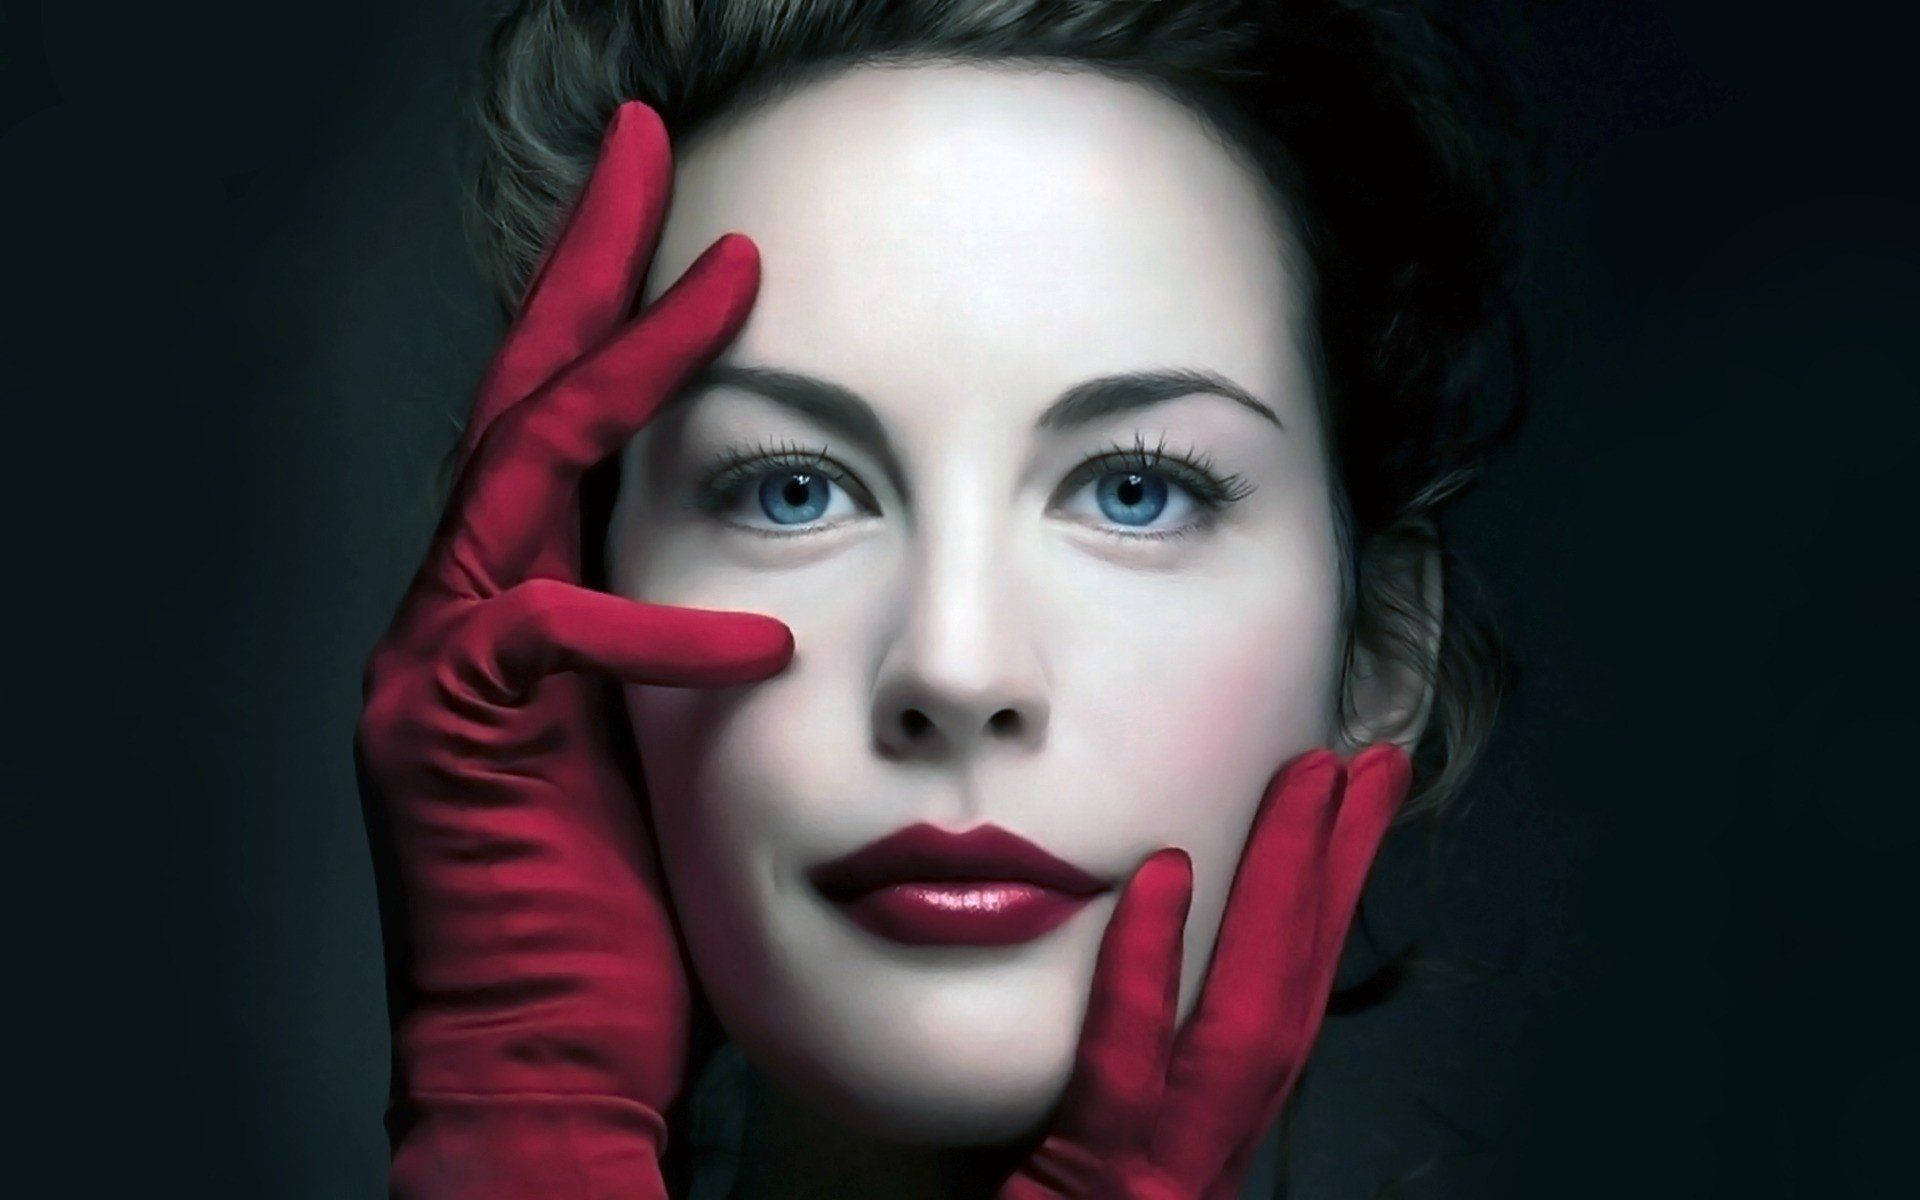 Livtyler Hand & Face Photoshoot = Liv Tyler Hand Och Ansikte Fotosession Wallpaper